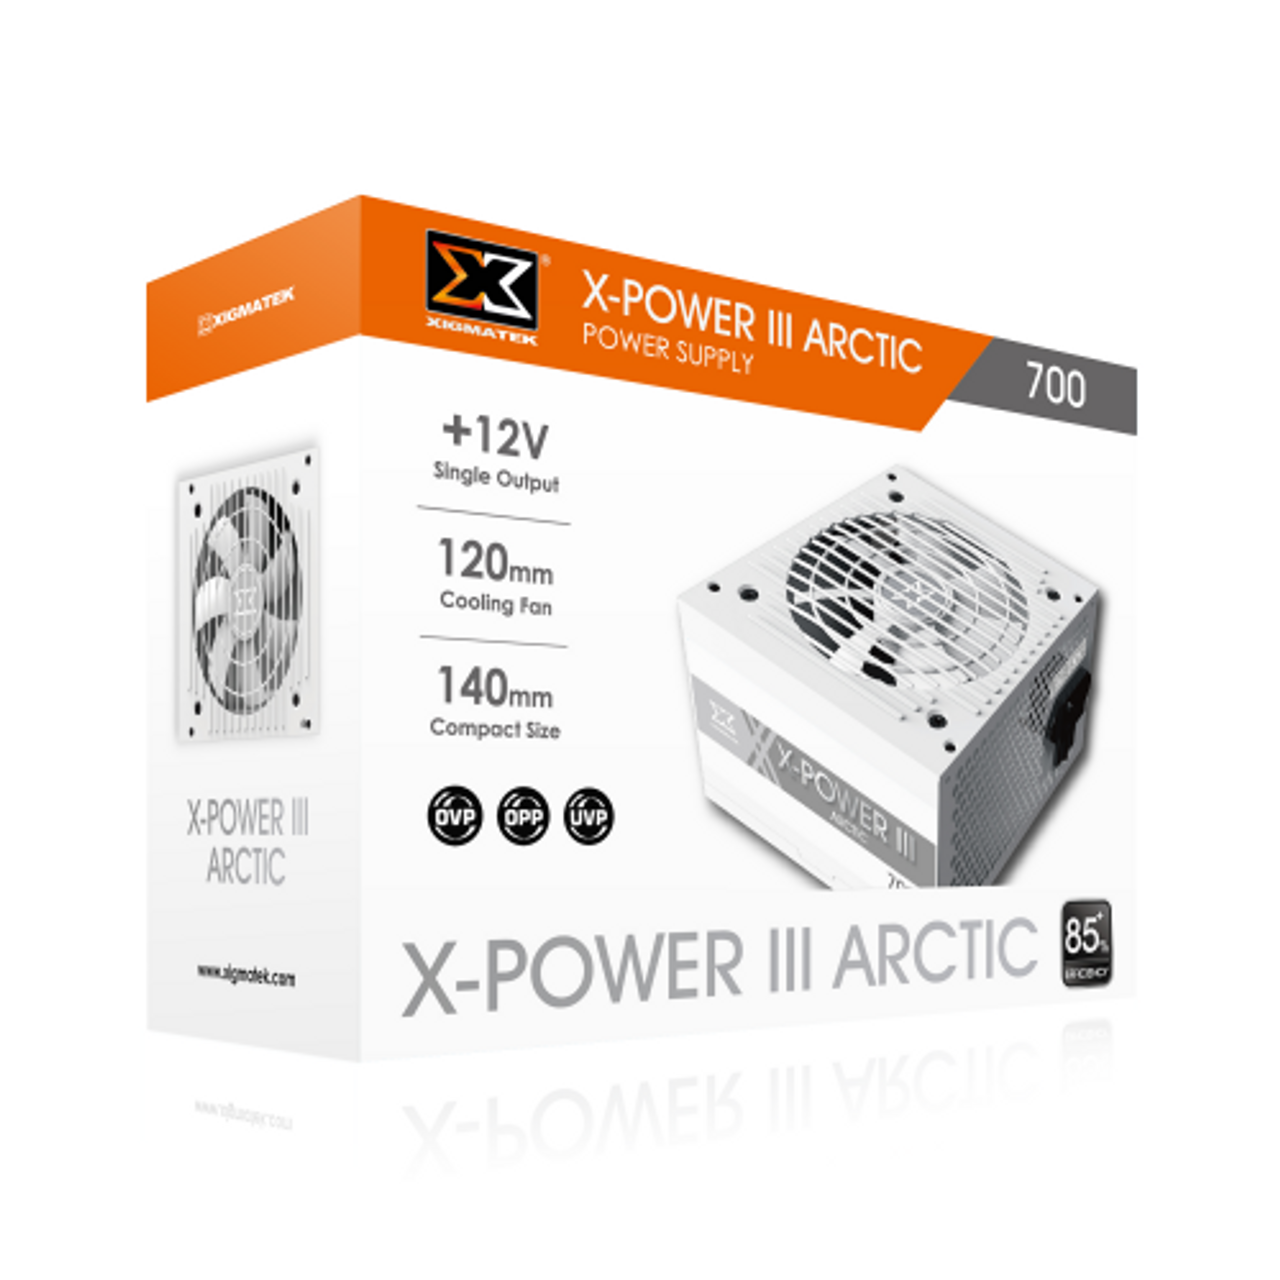 Xigmatek - Spectrum 700W (80Plus White) - Alimentation PC non modulaire -  Alimentation modulaire - Rue du Commerce